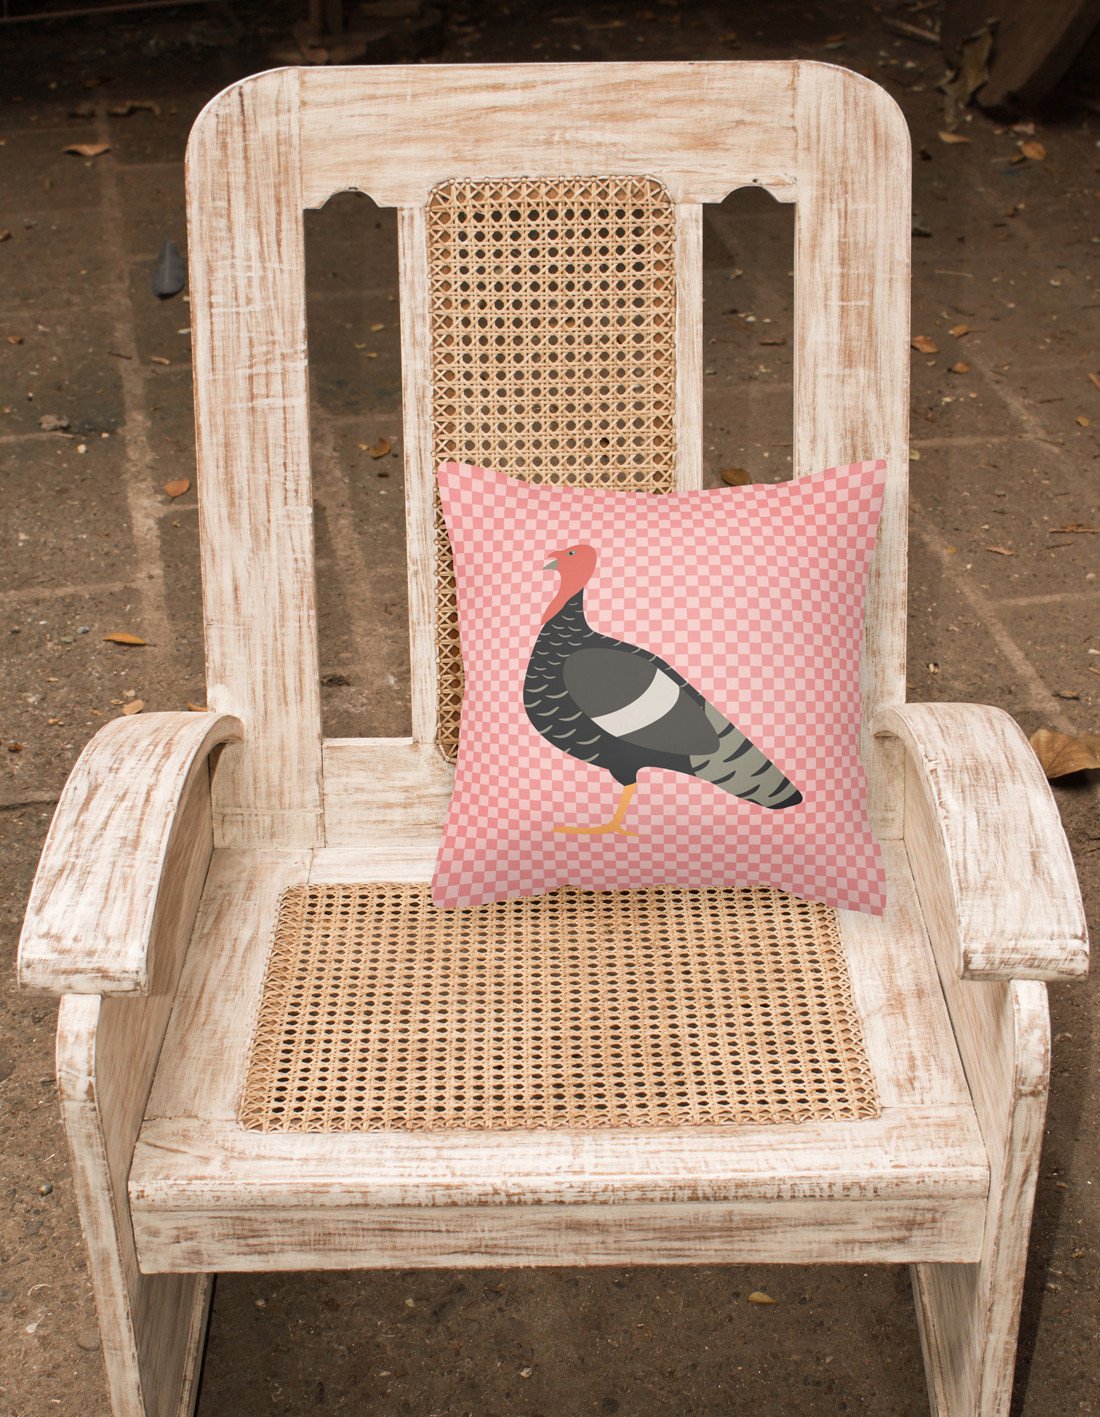 Marragansett Turkey Pink Check Fabric Decorative Pillow BB7987PW1818 by Caroline's Treasures